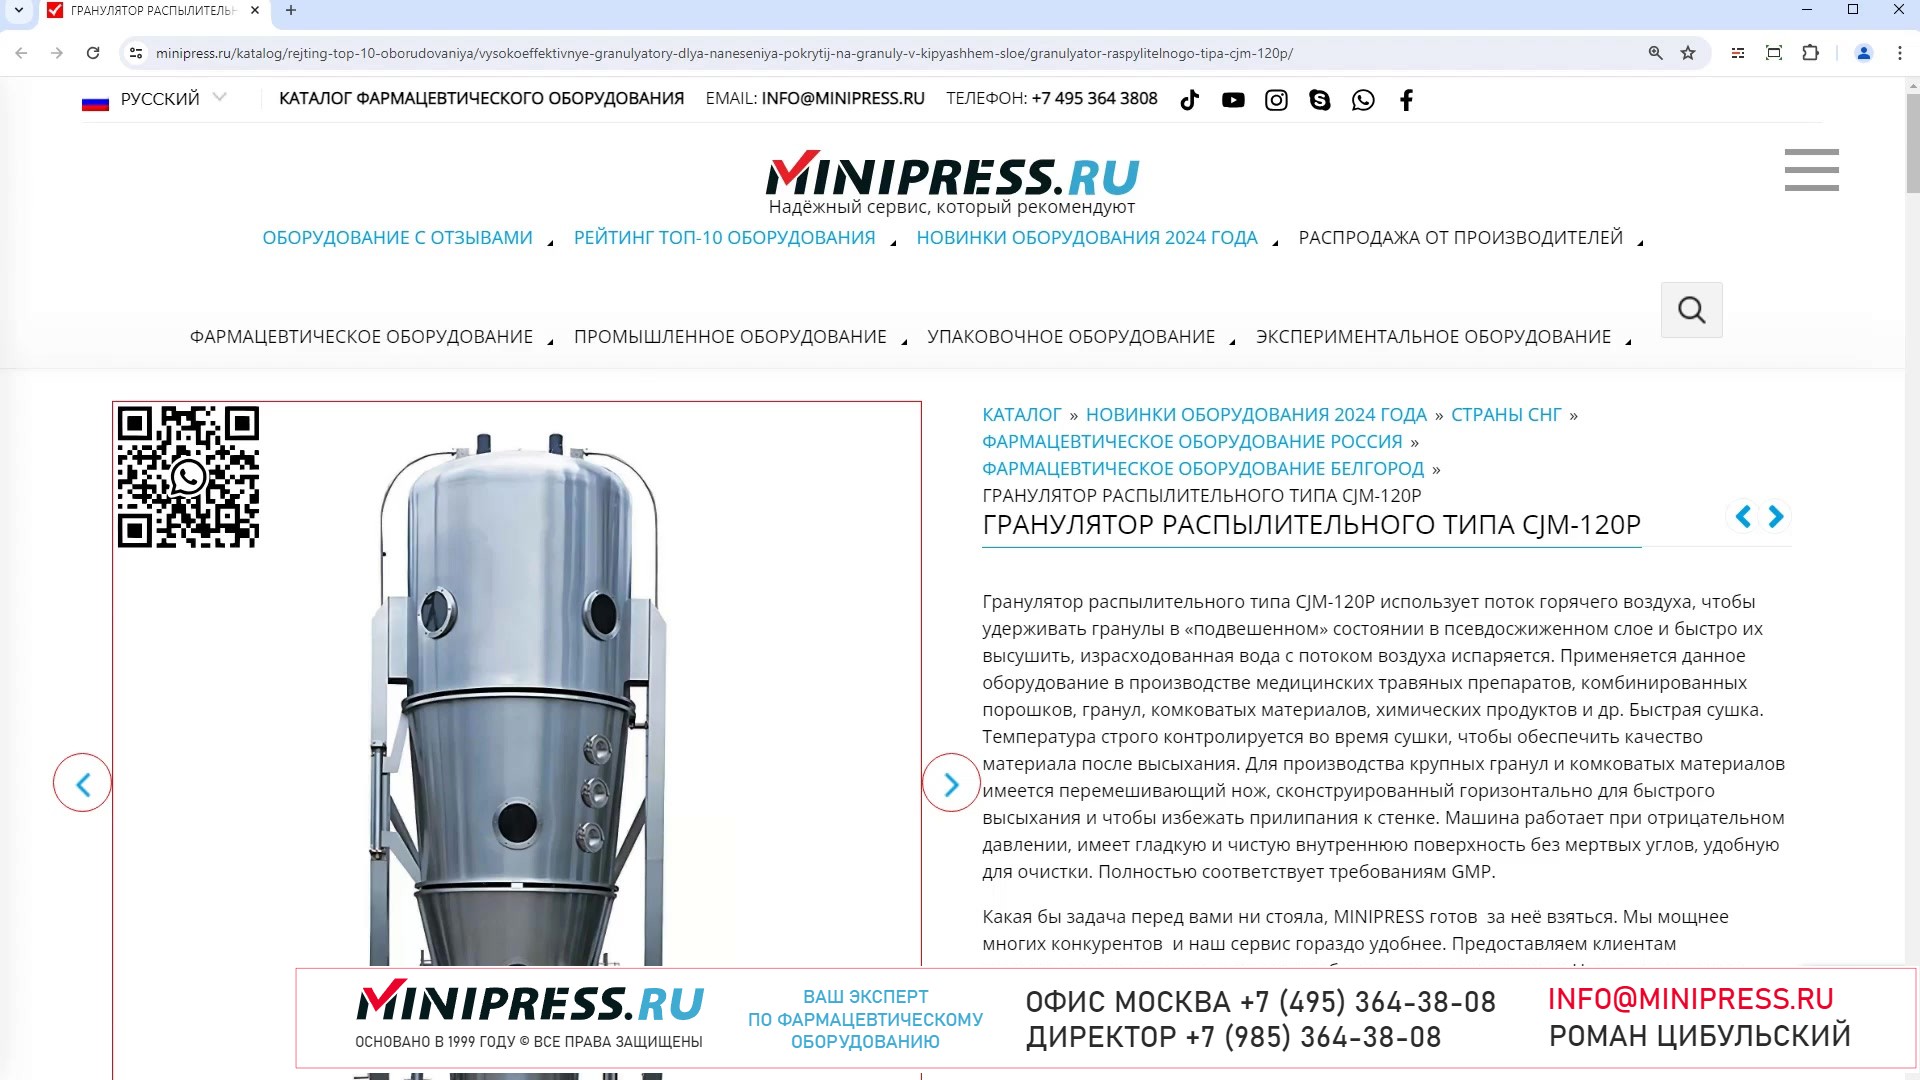 Minipress.ru Гранулятор распылительного типа CJM-120P